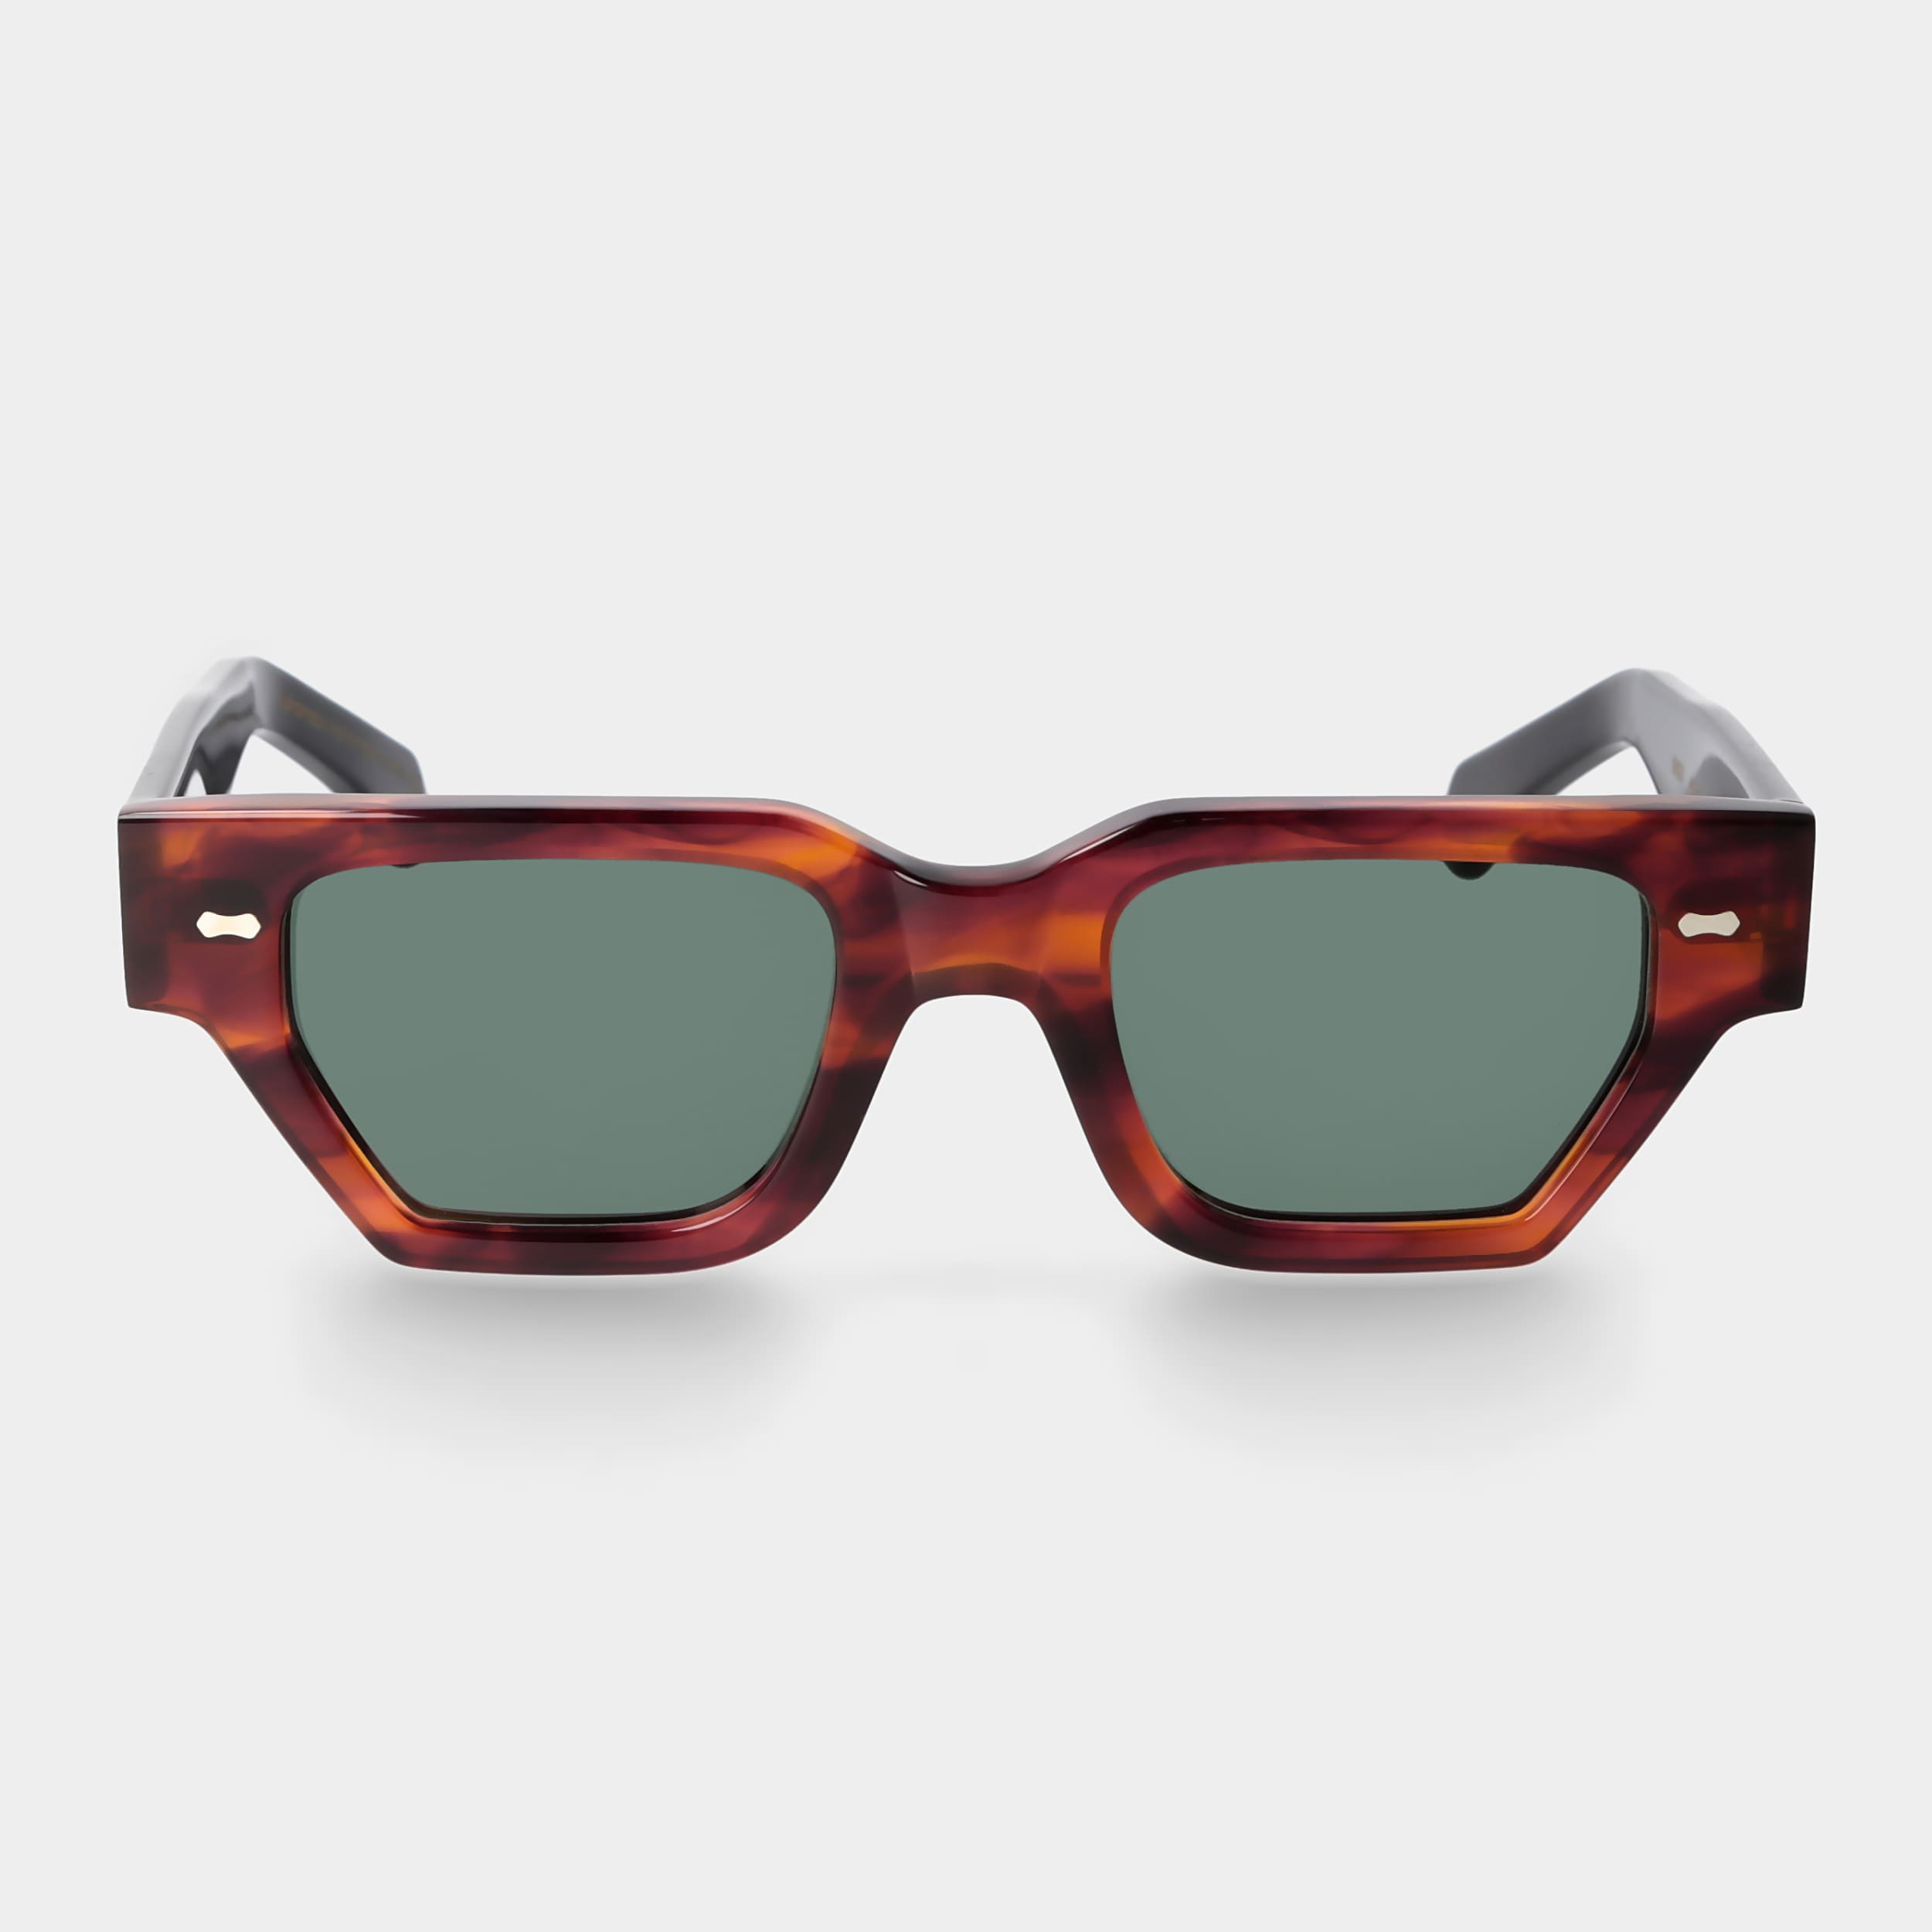 sunglasses-raso-eco-bicolor-bottle-green-sustainable-tbd-eyewear-front